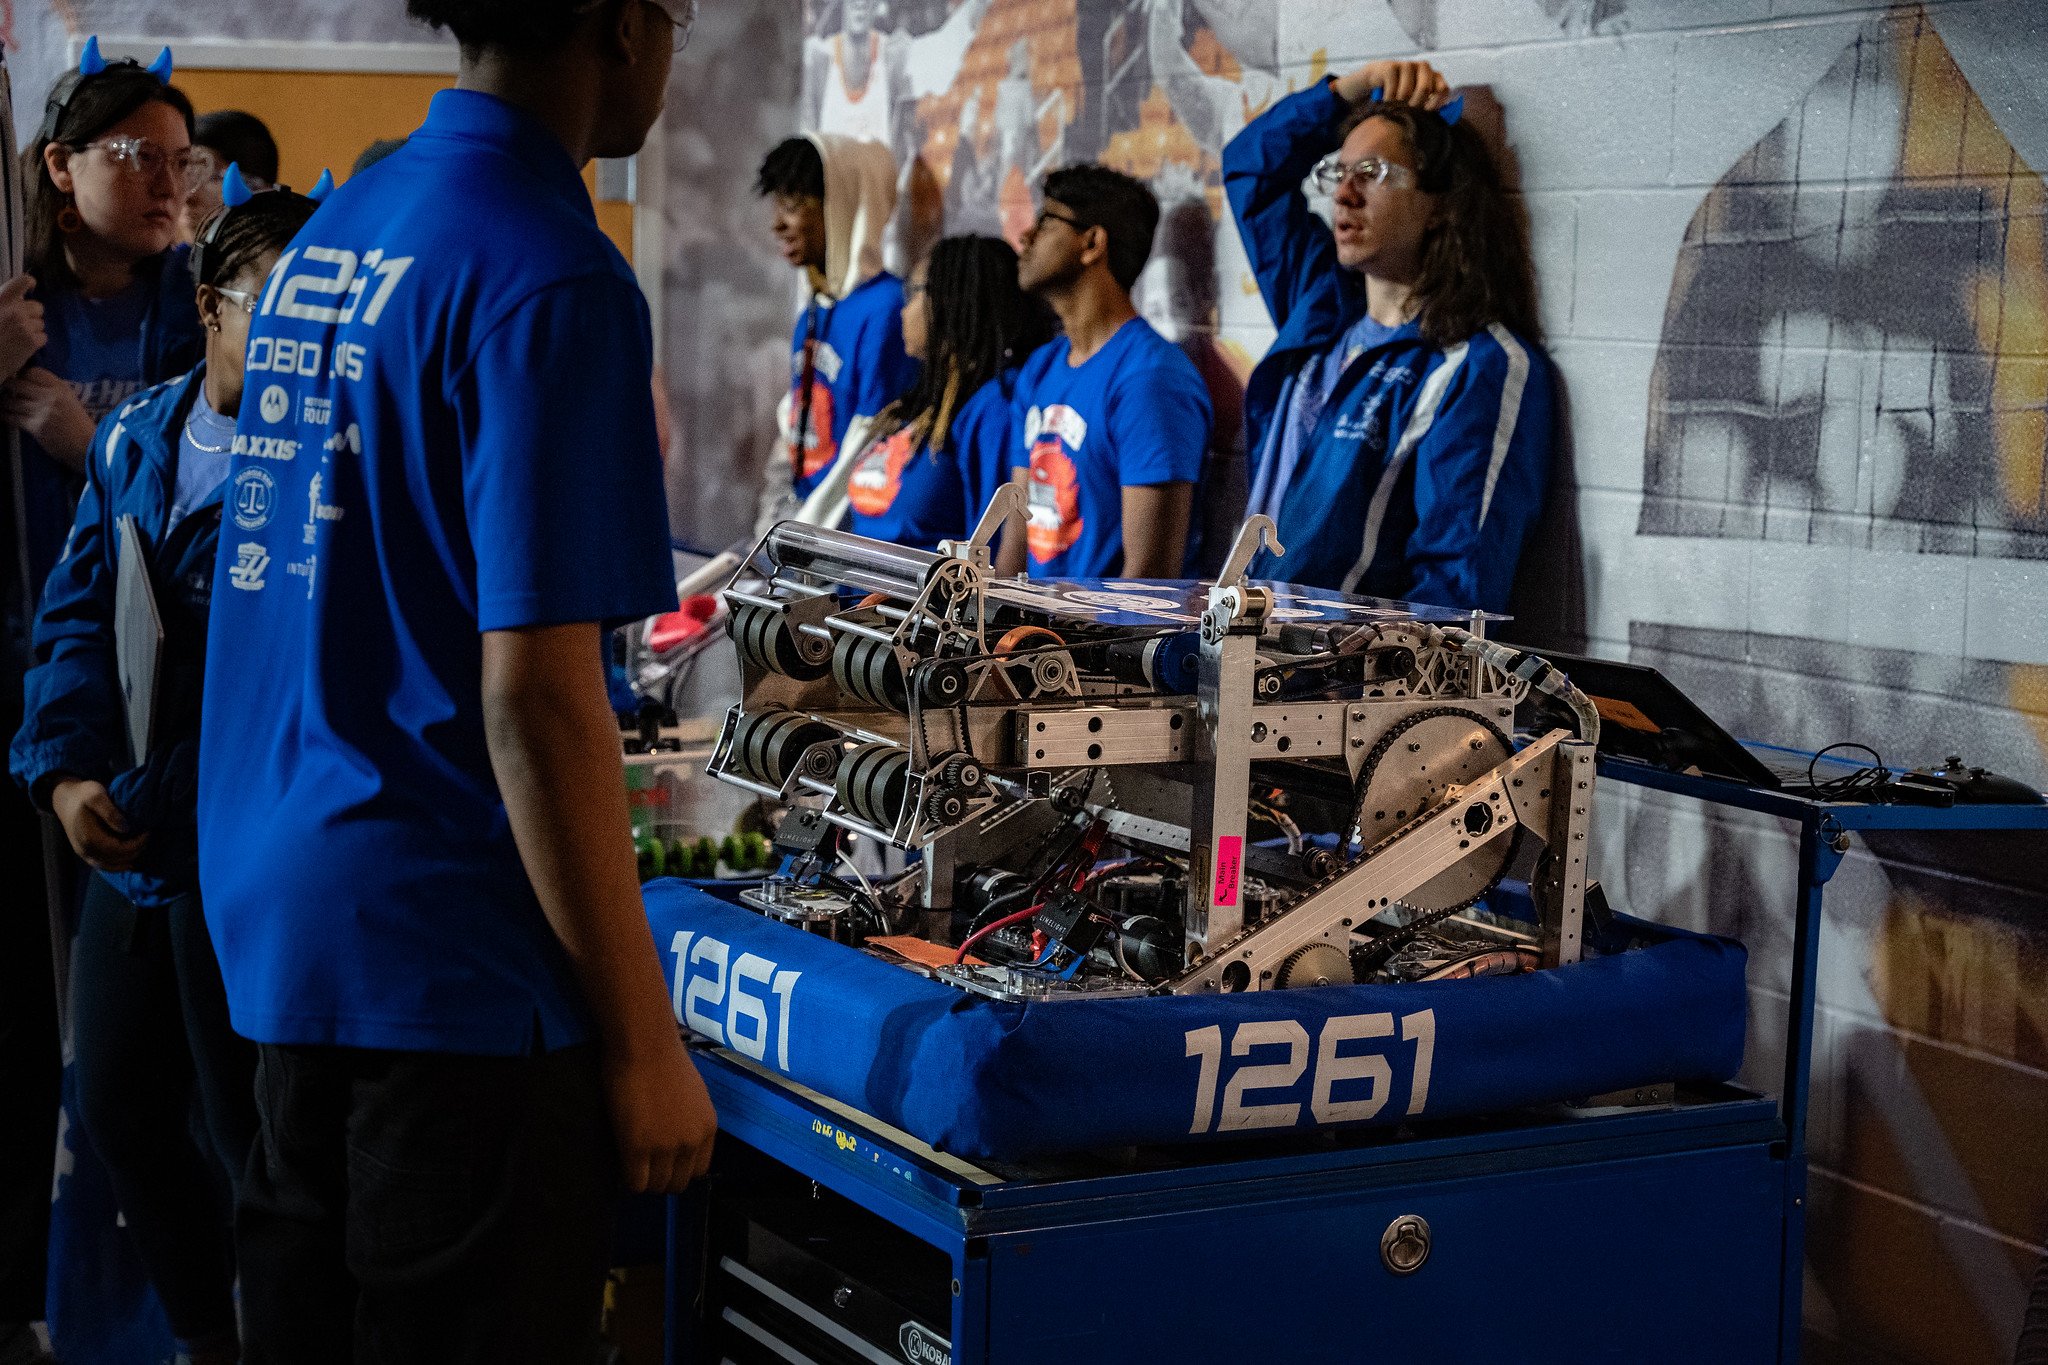 Mercer University Robotics Competition